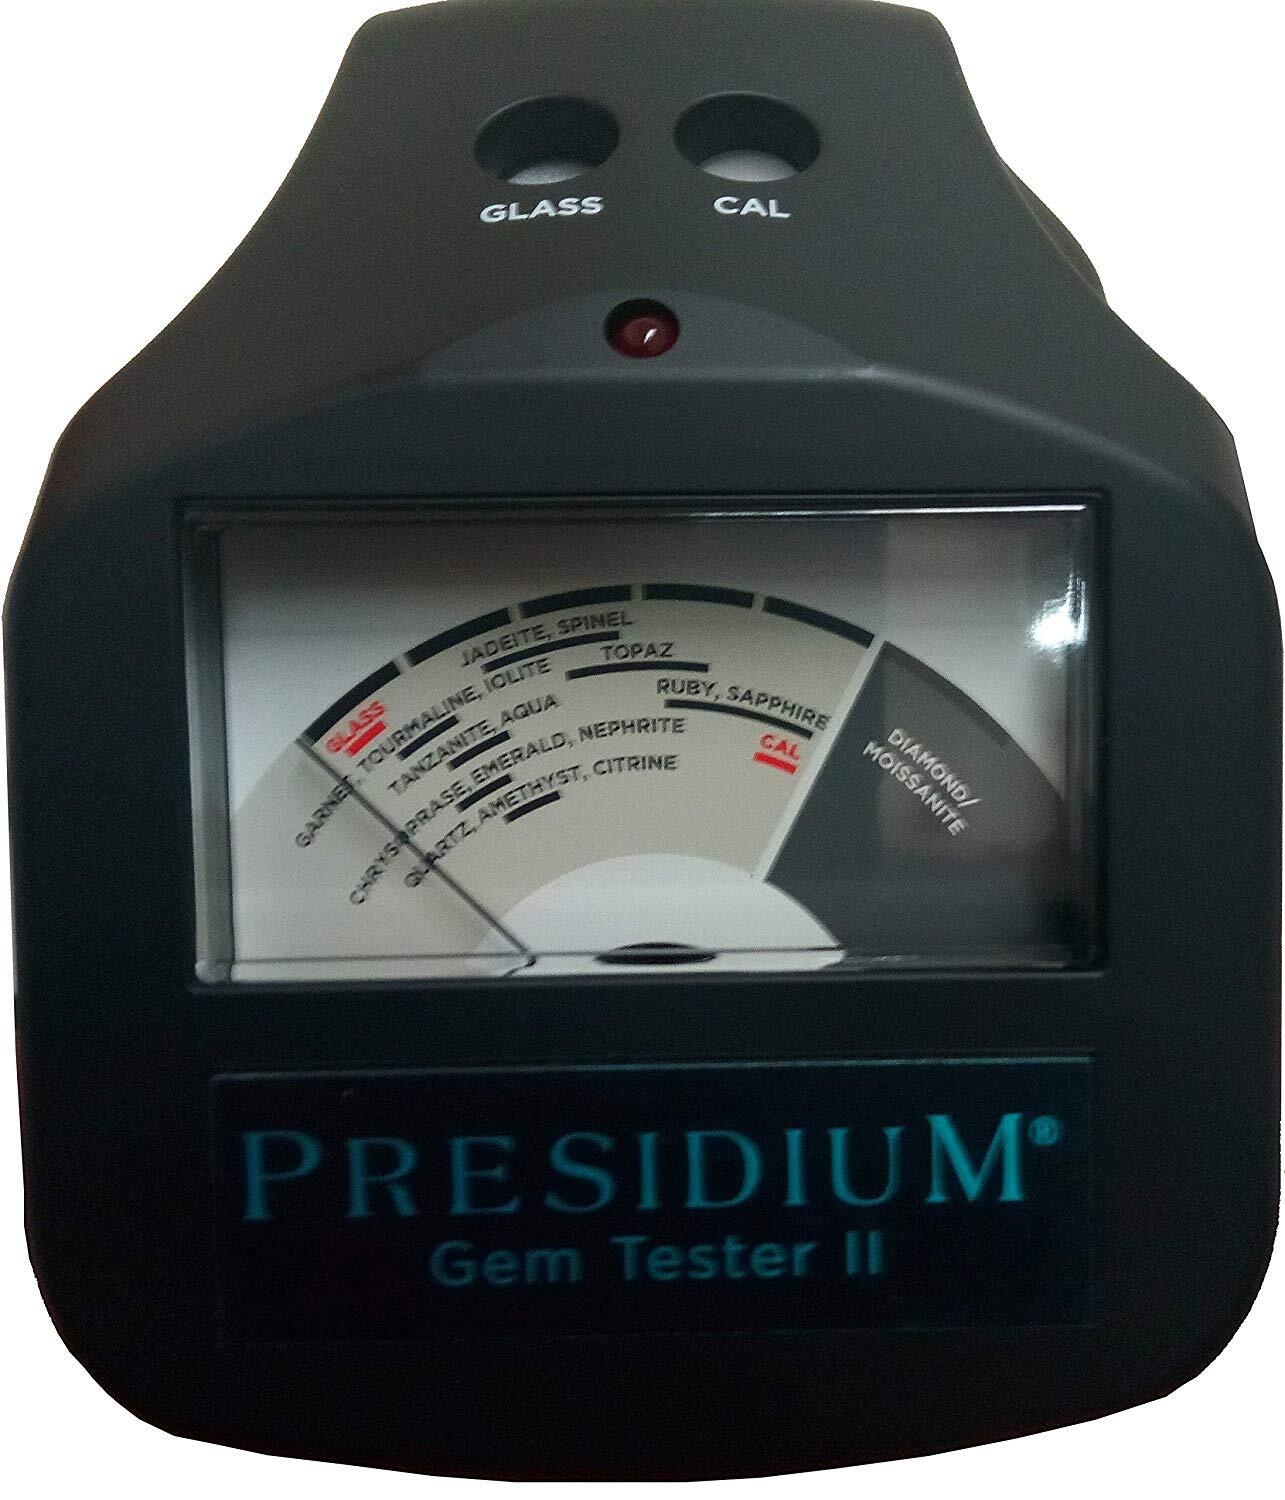 Presidium Gem Tester for sale